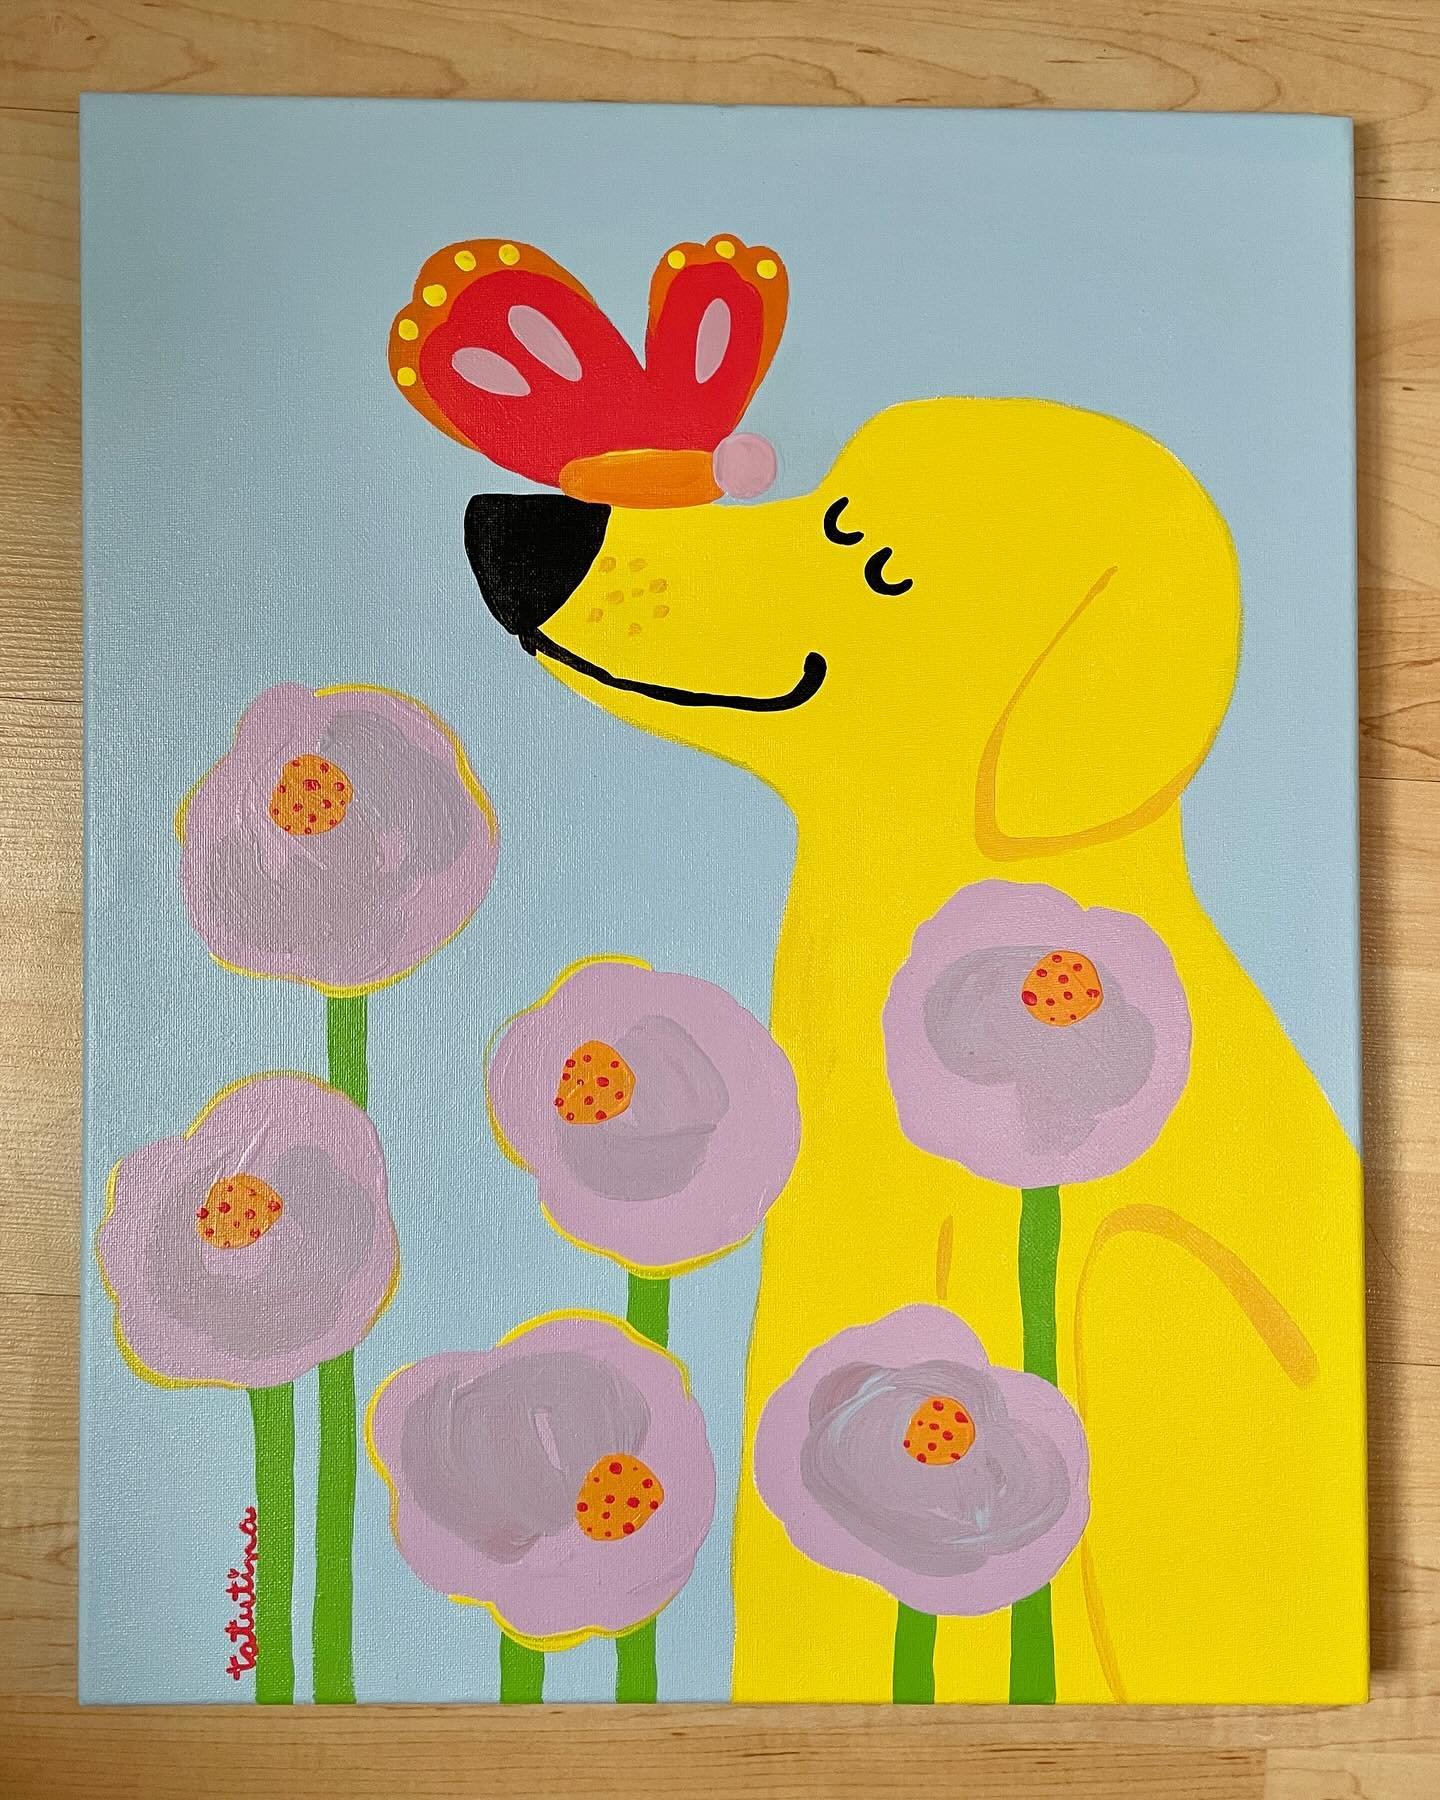 New Painting &ldquo;Social Butterfly&rdquo;  is up @bostonpublicmarket local Spring Showcase! 
Thank you @laurelgreenfieldart ❤️

#socialbutterfly #originalartforsale #yellowdog #tatutina